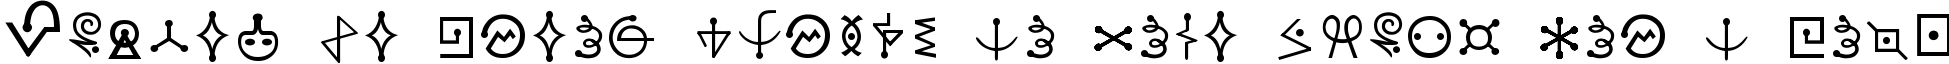 Пример написания шрифтом Futurama Alien Alphabet One текста на французском